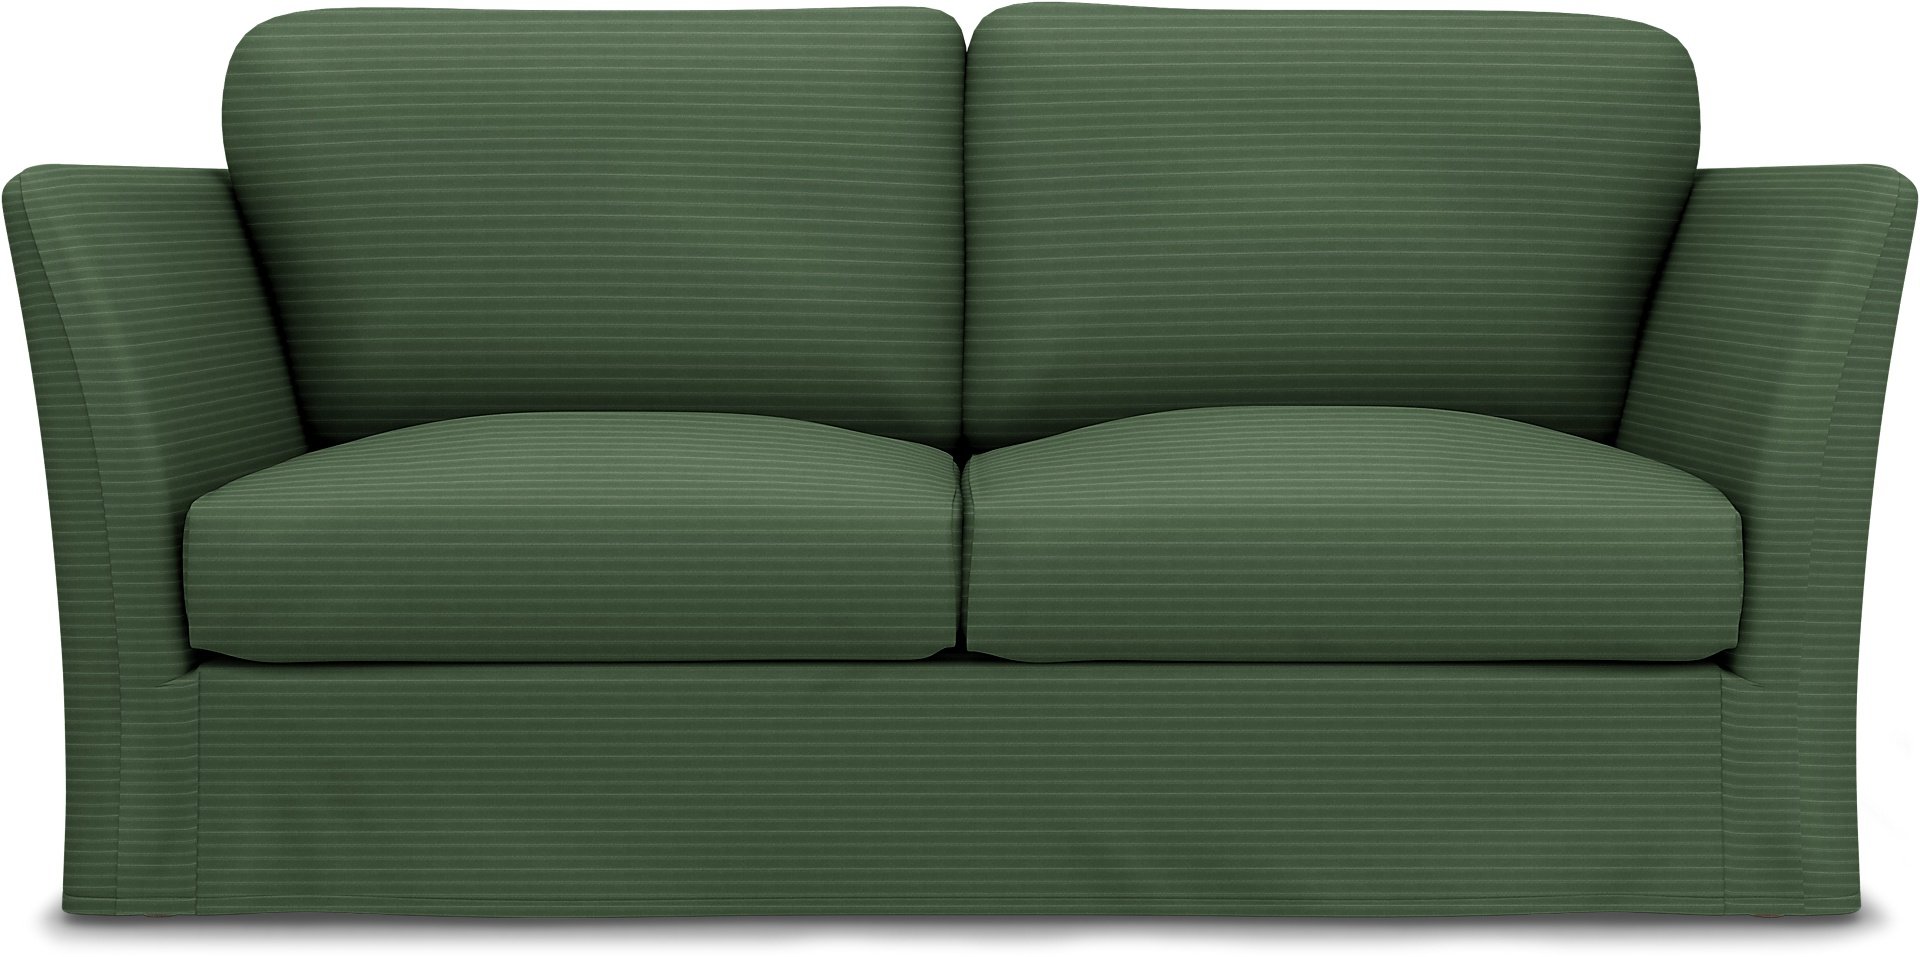 Överdrag till Mio Madison 2-sits soffa med armstödstyp A, Palm Green, Manchester - Bemz